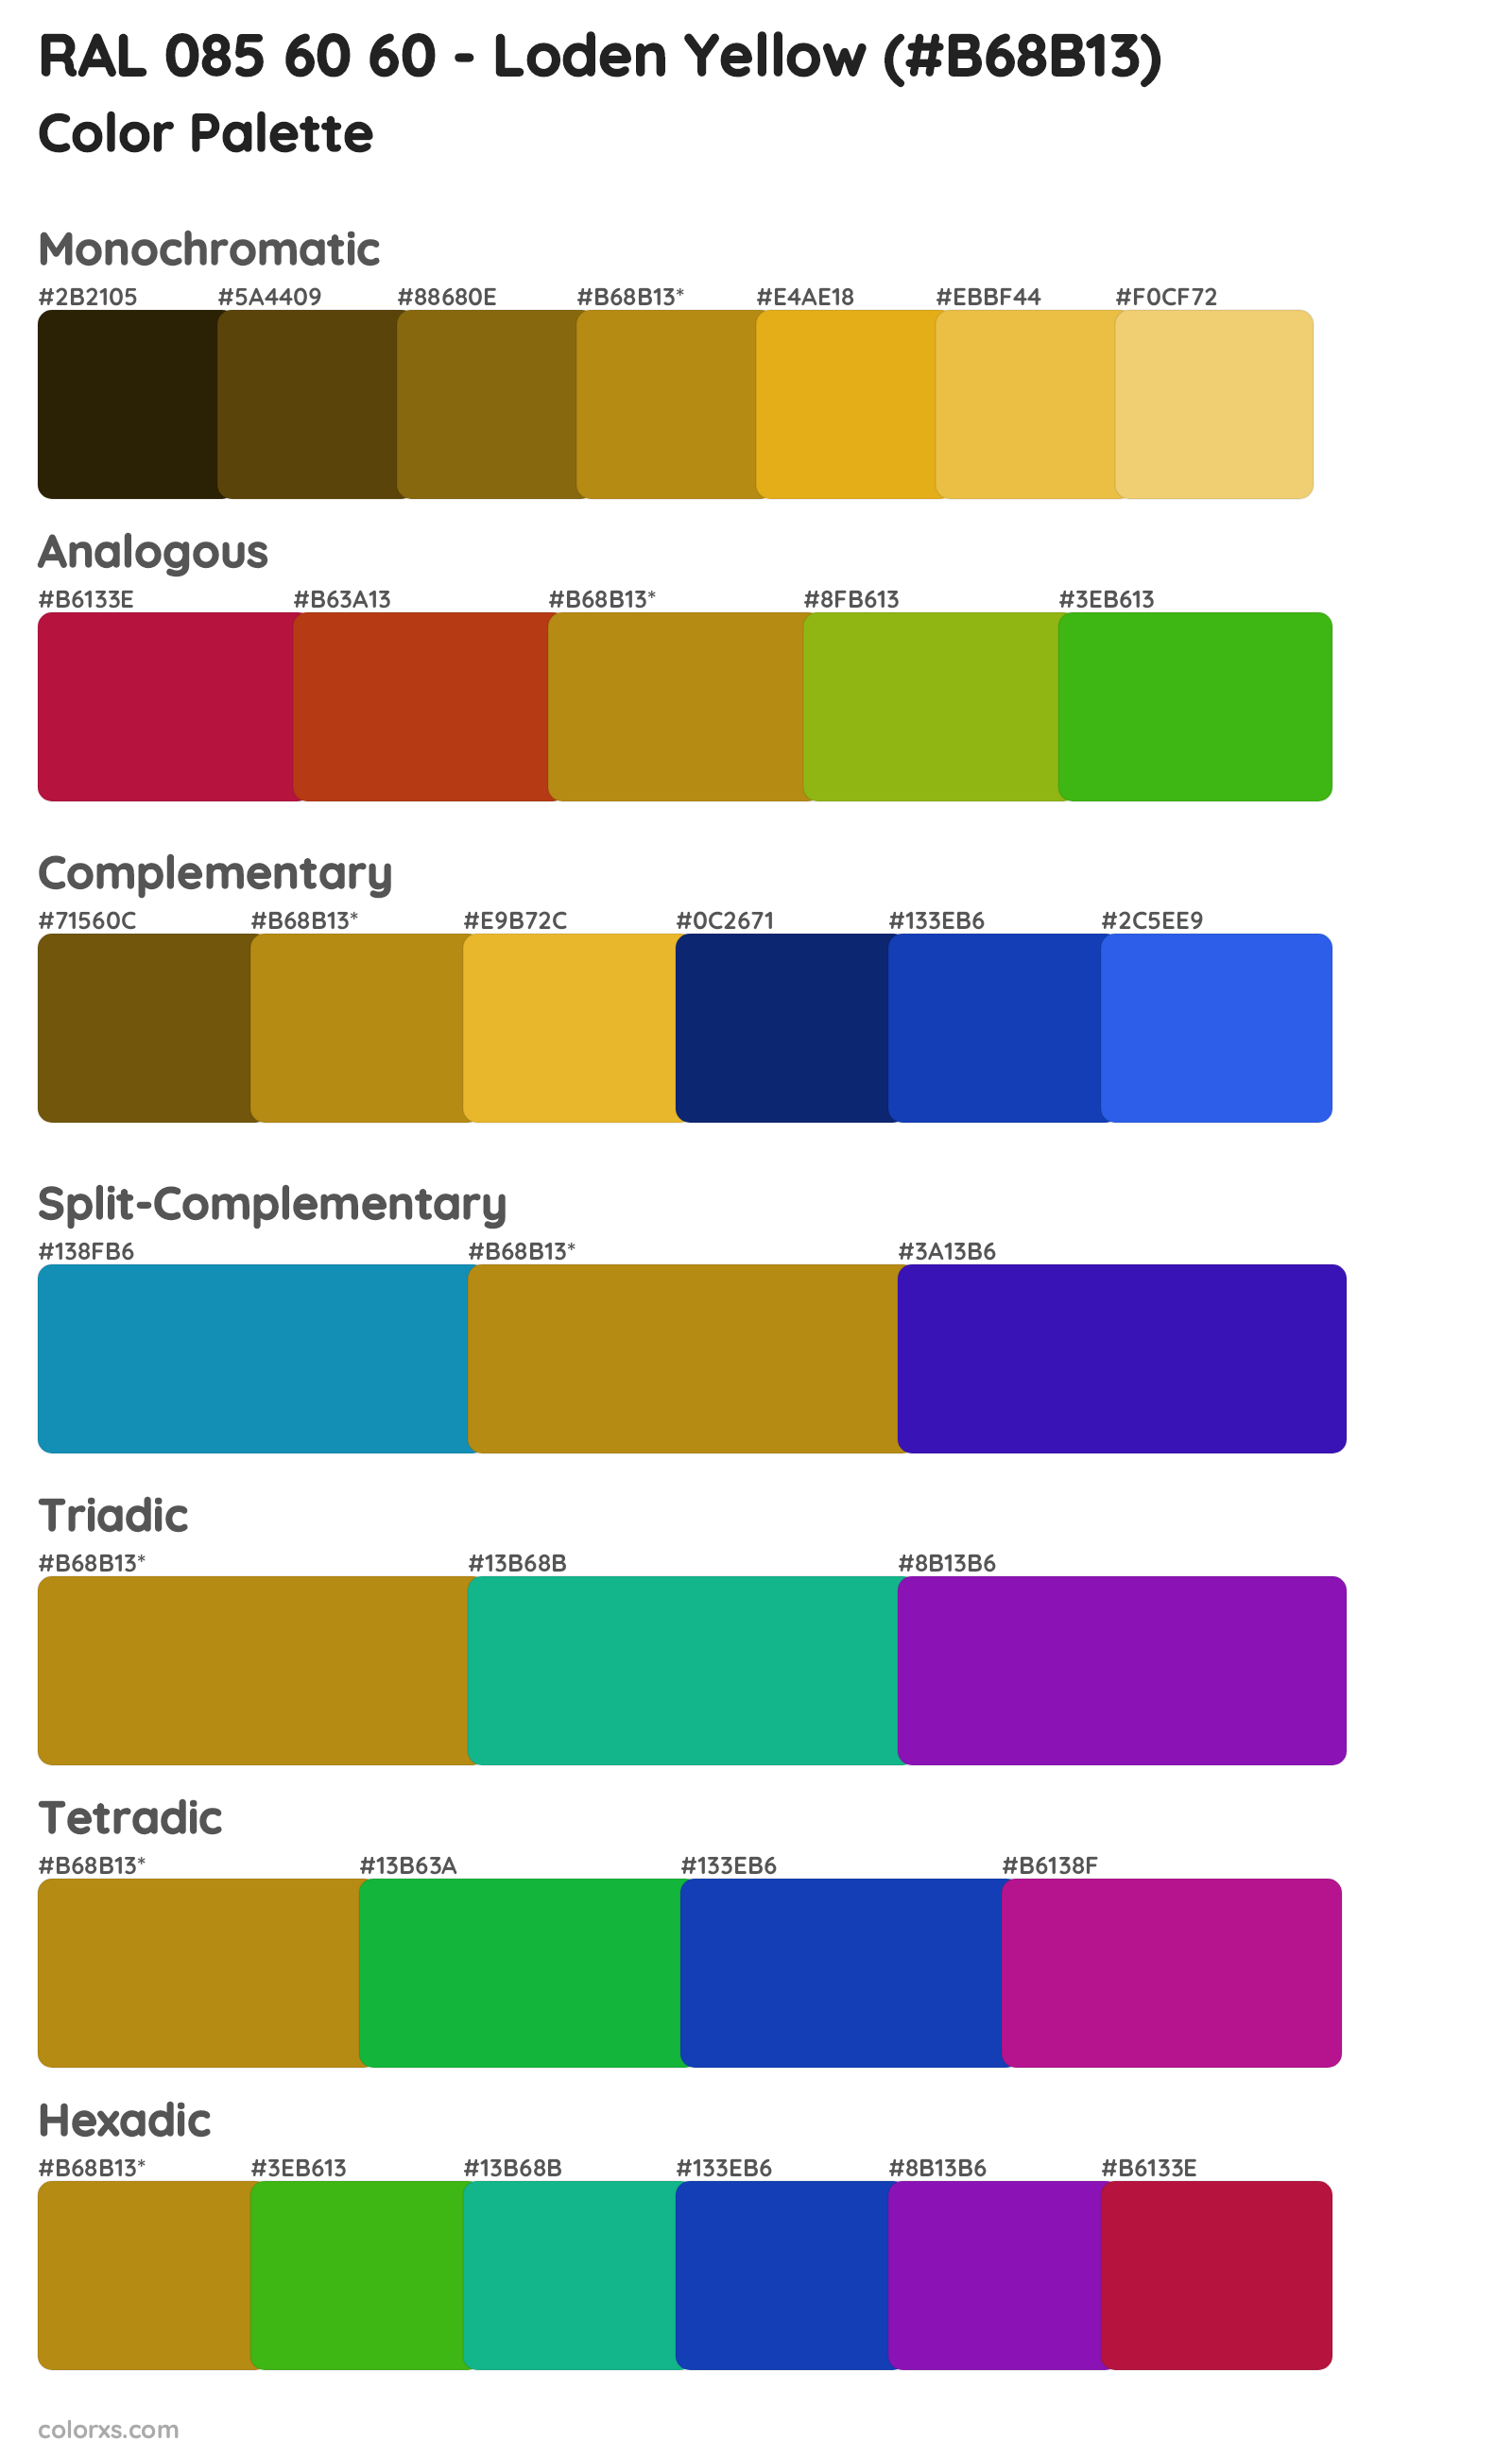 RAL 085 60 60 - Loden Yellow Color Scheme Palettes